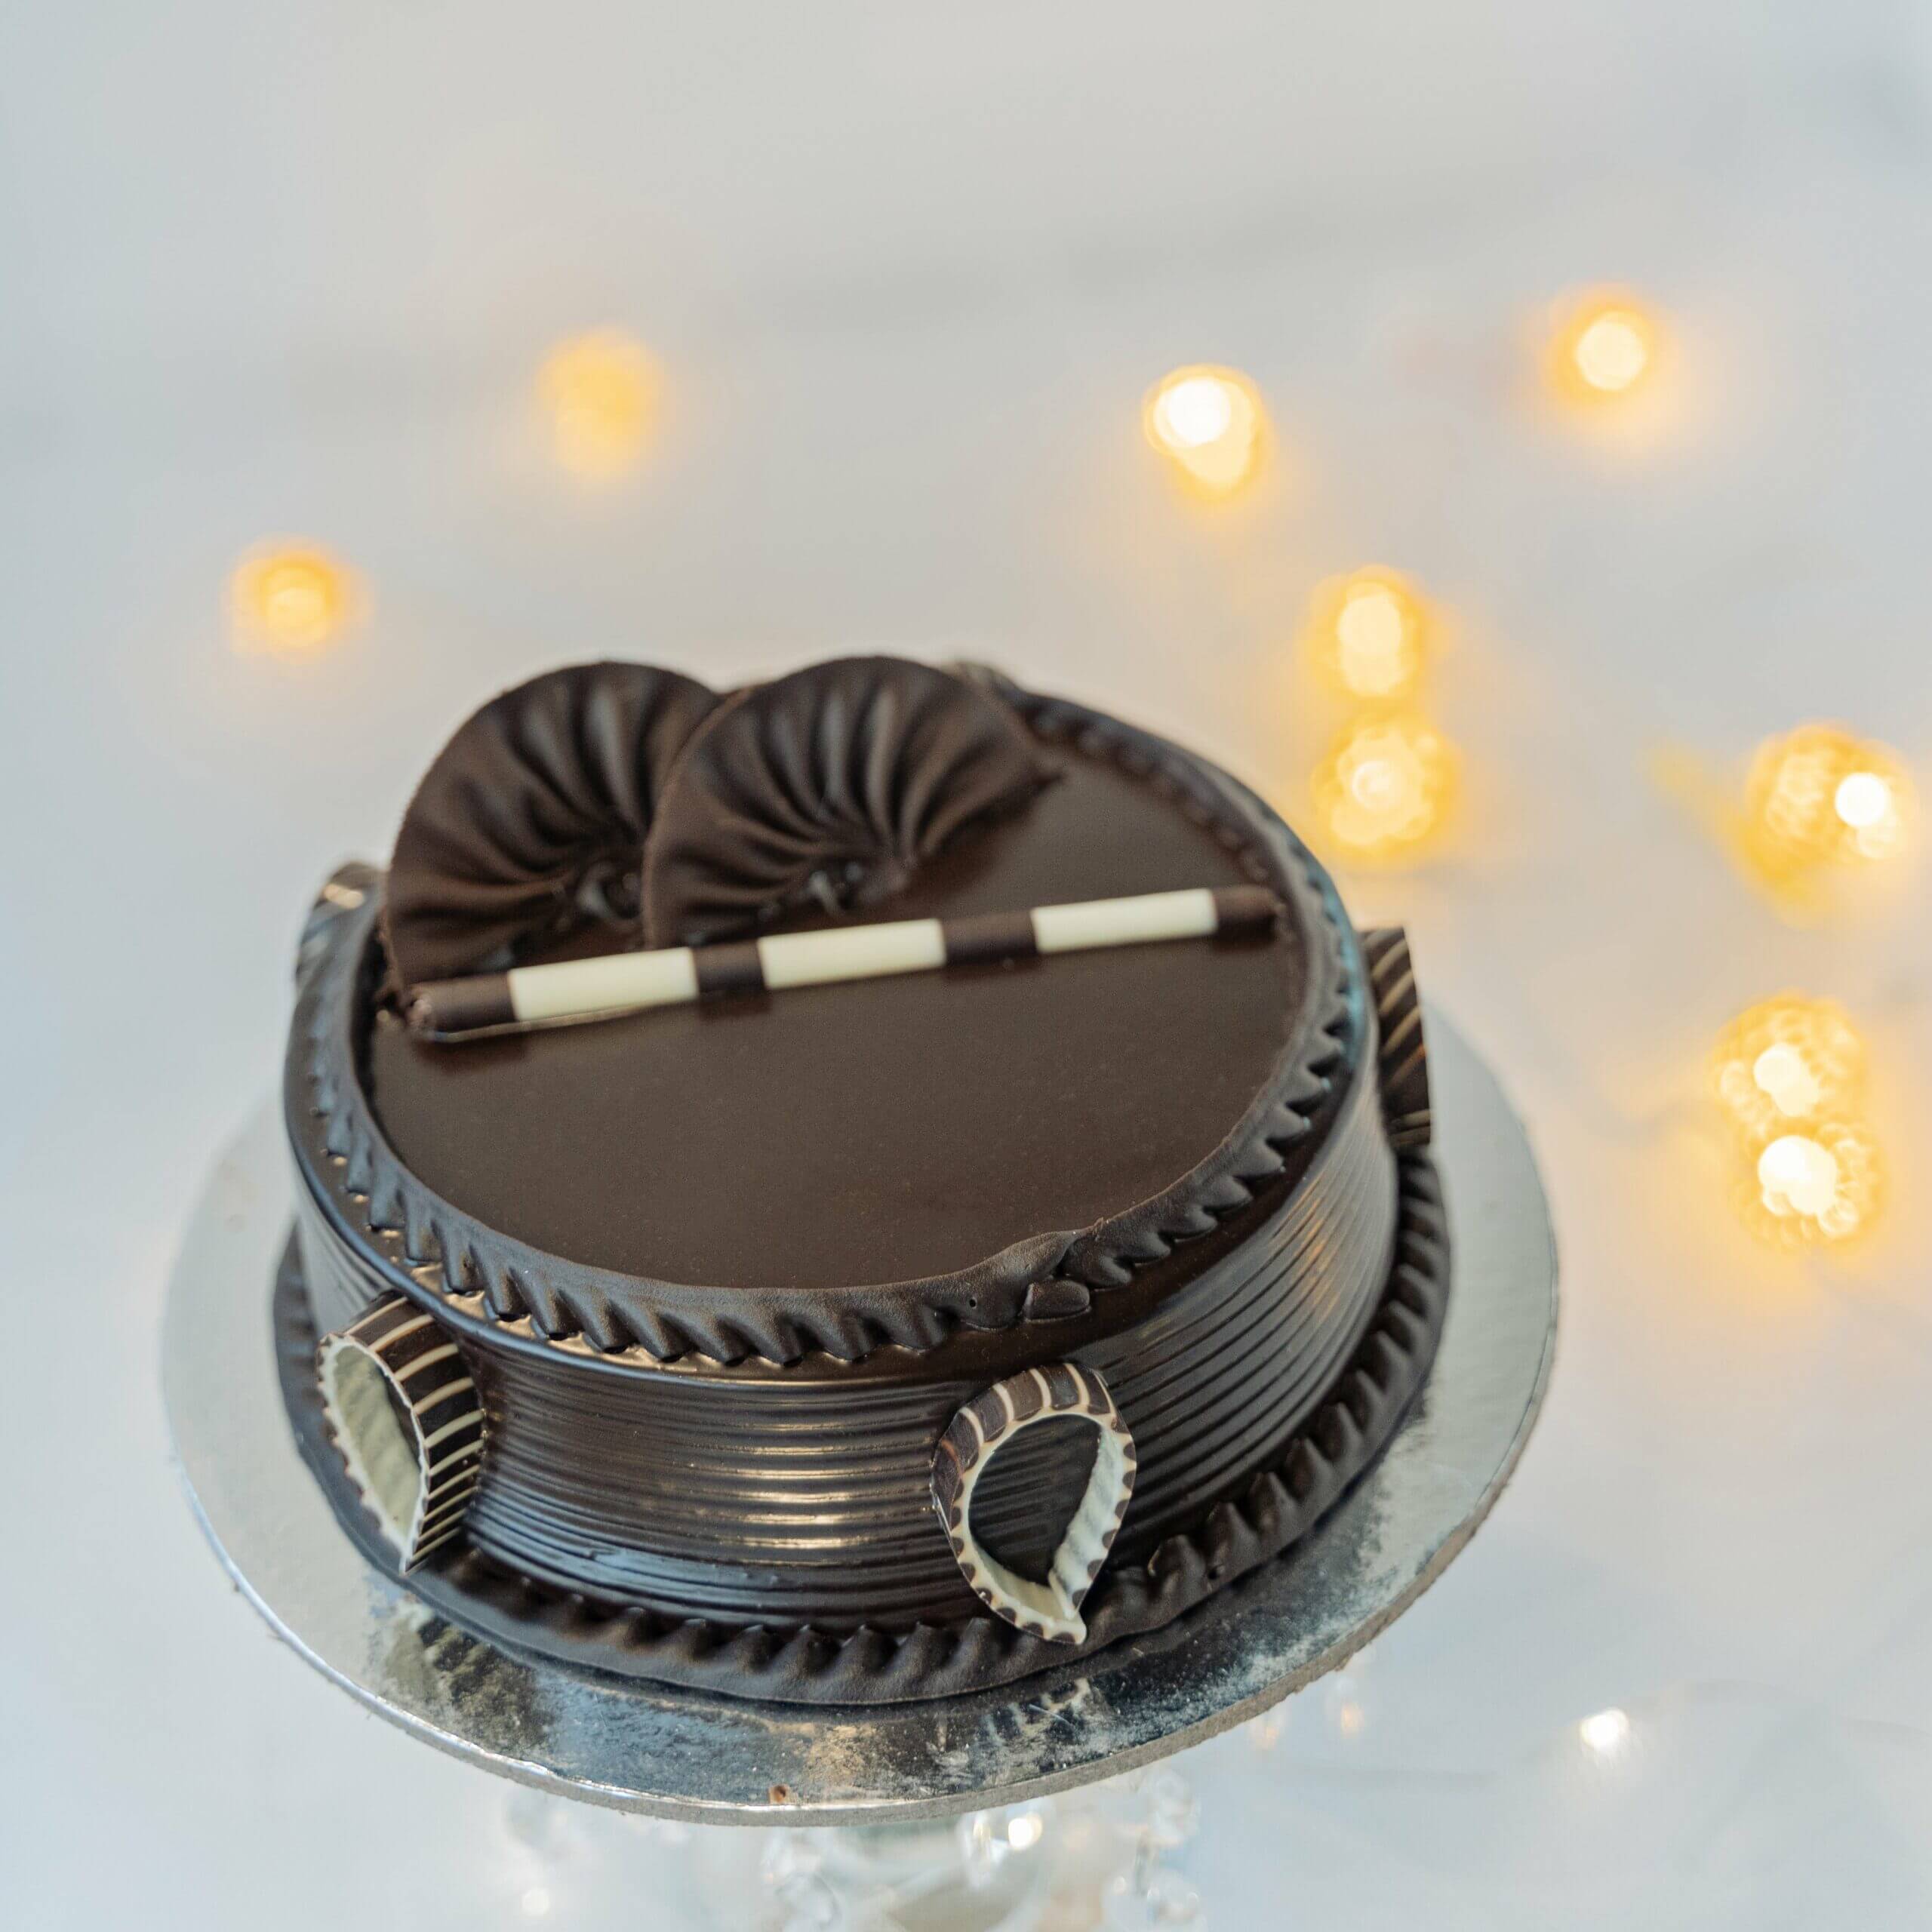 First Cake 2021 | 2 Step Cake Design | 2 Tier Chocolate Truffle Cake Design  - YouTube